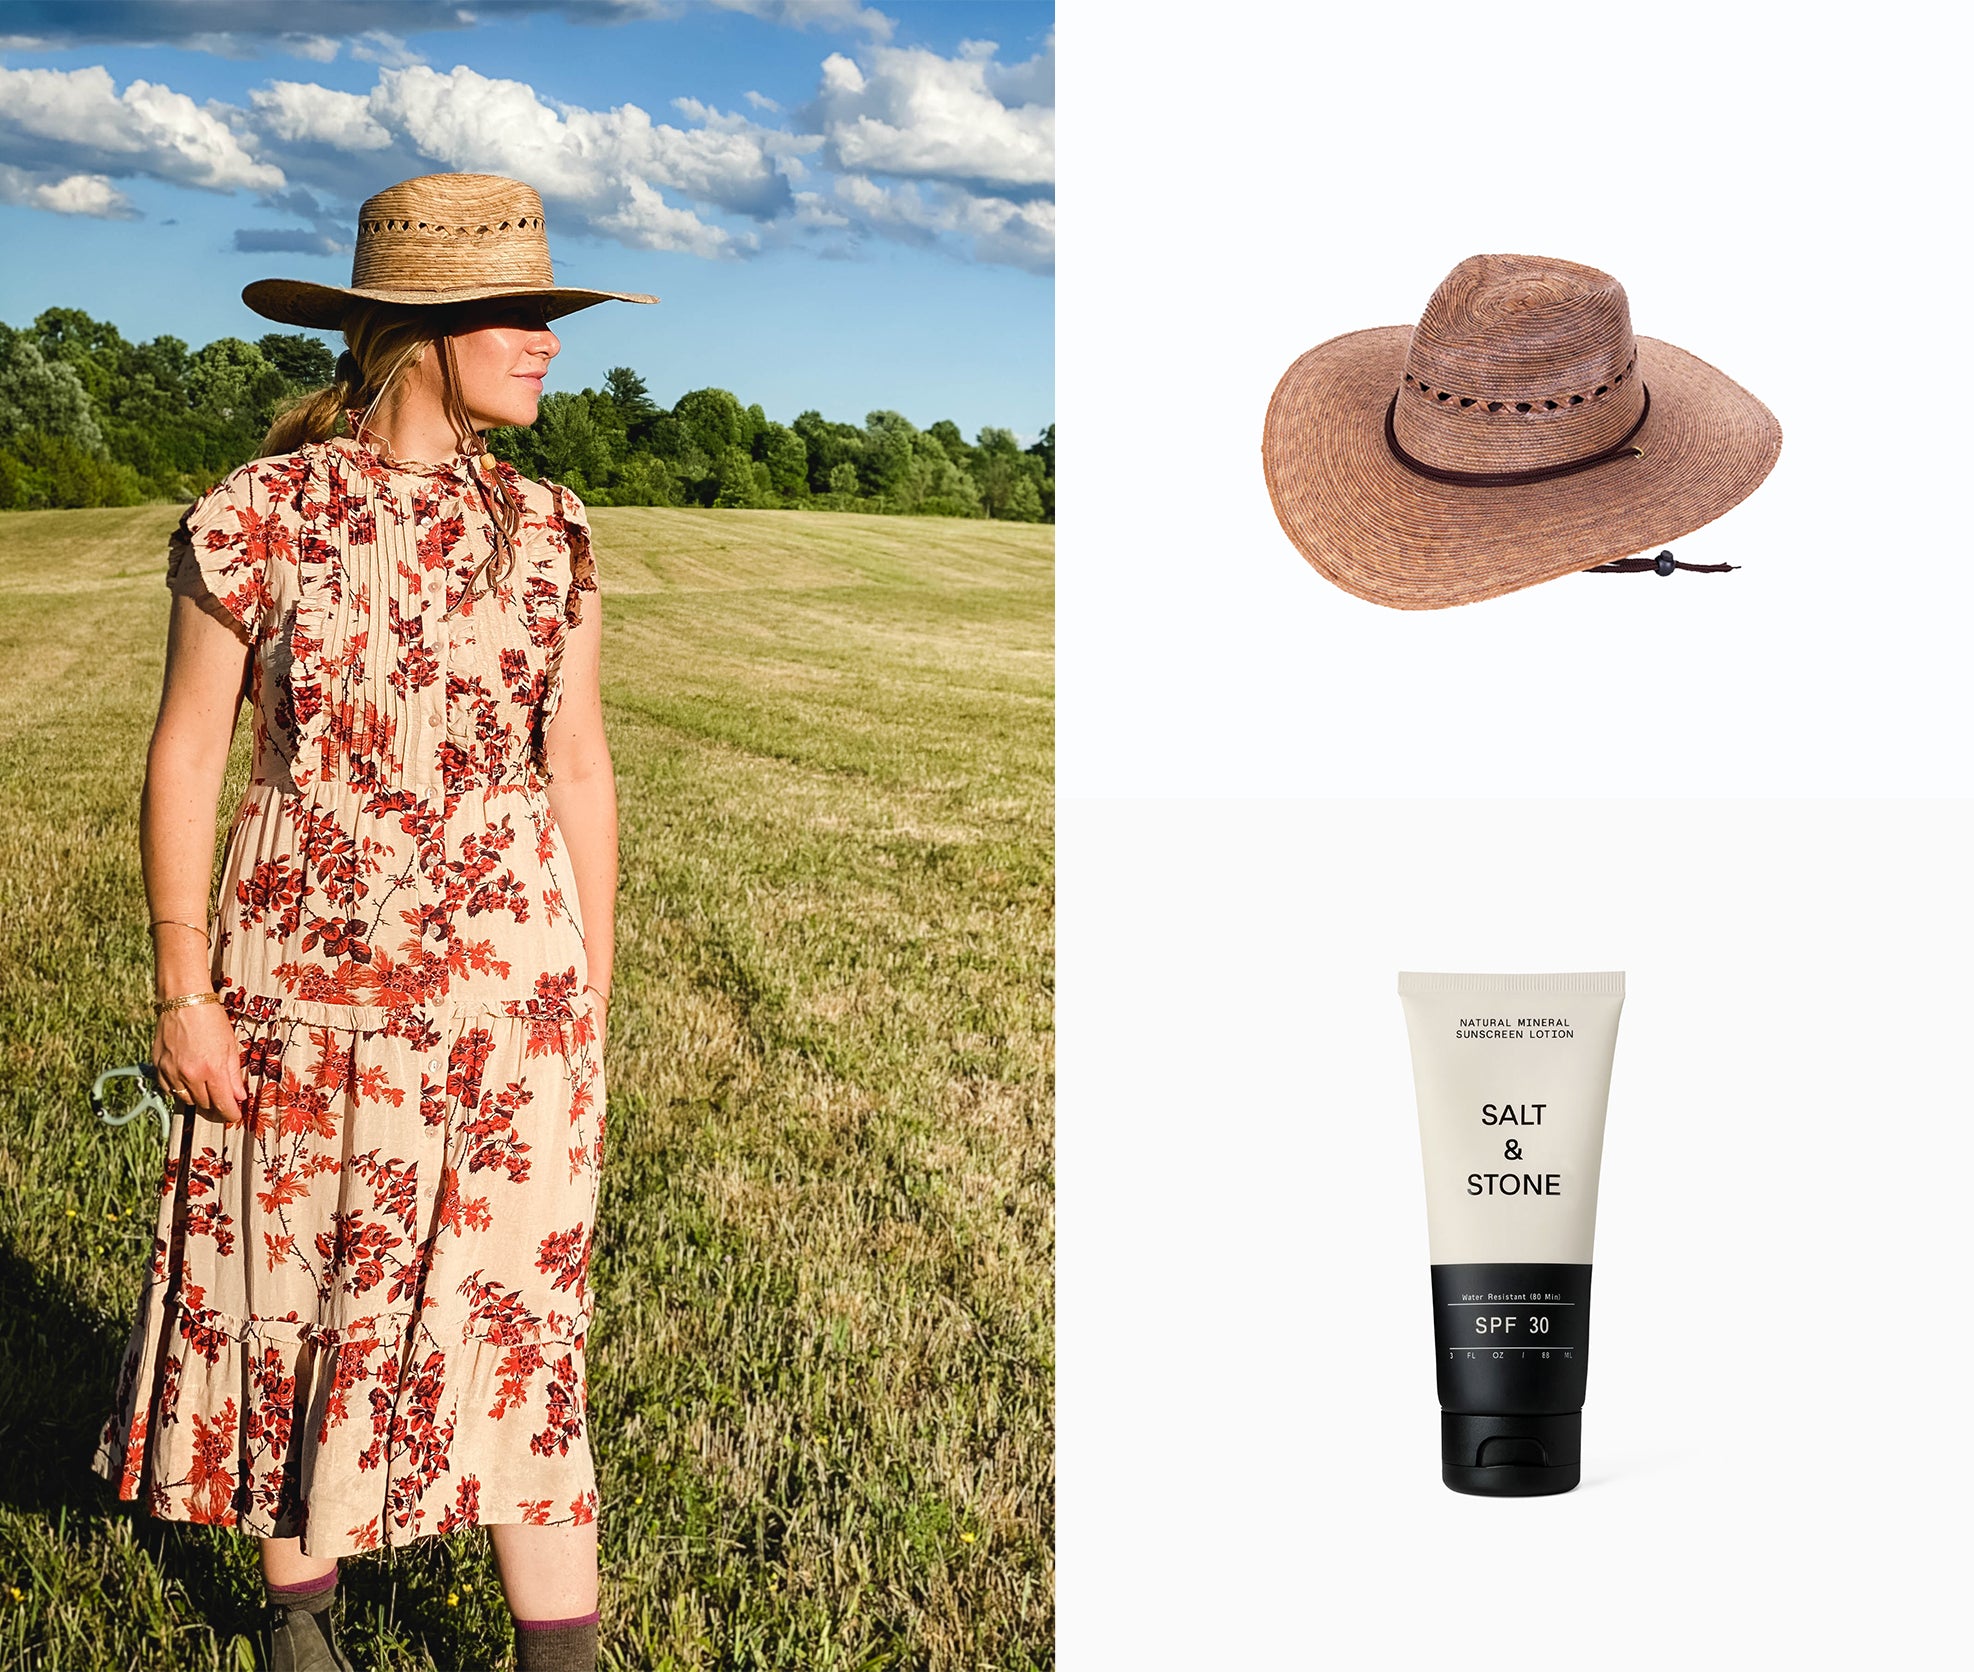 Gardener Lattice Hat and Salt & Stone Sunscreen